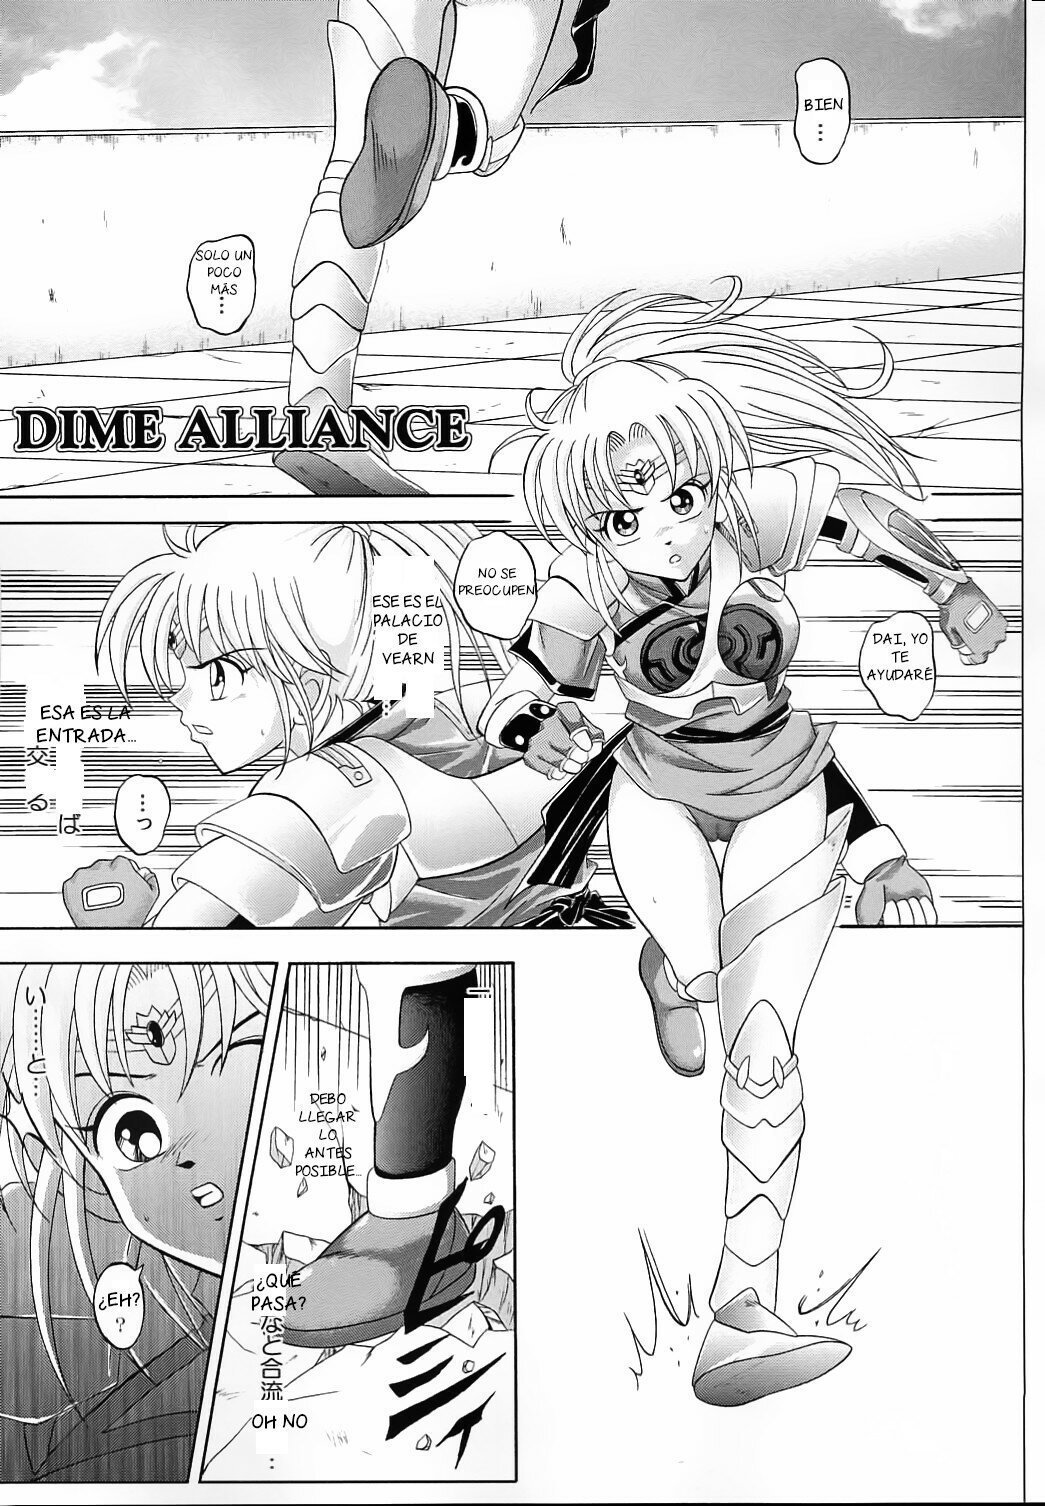 Dime Alliance 1 - 1